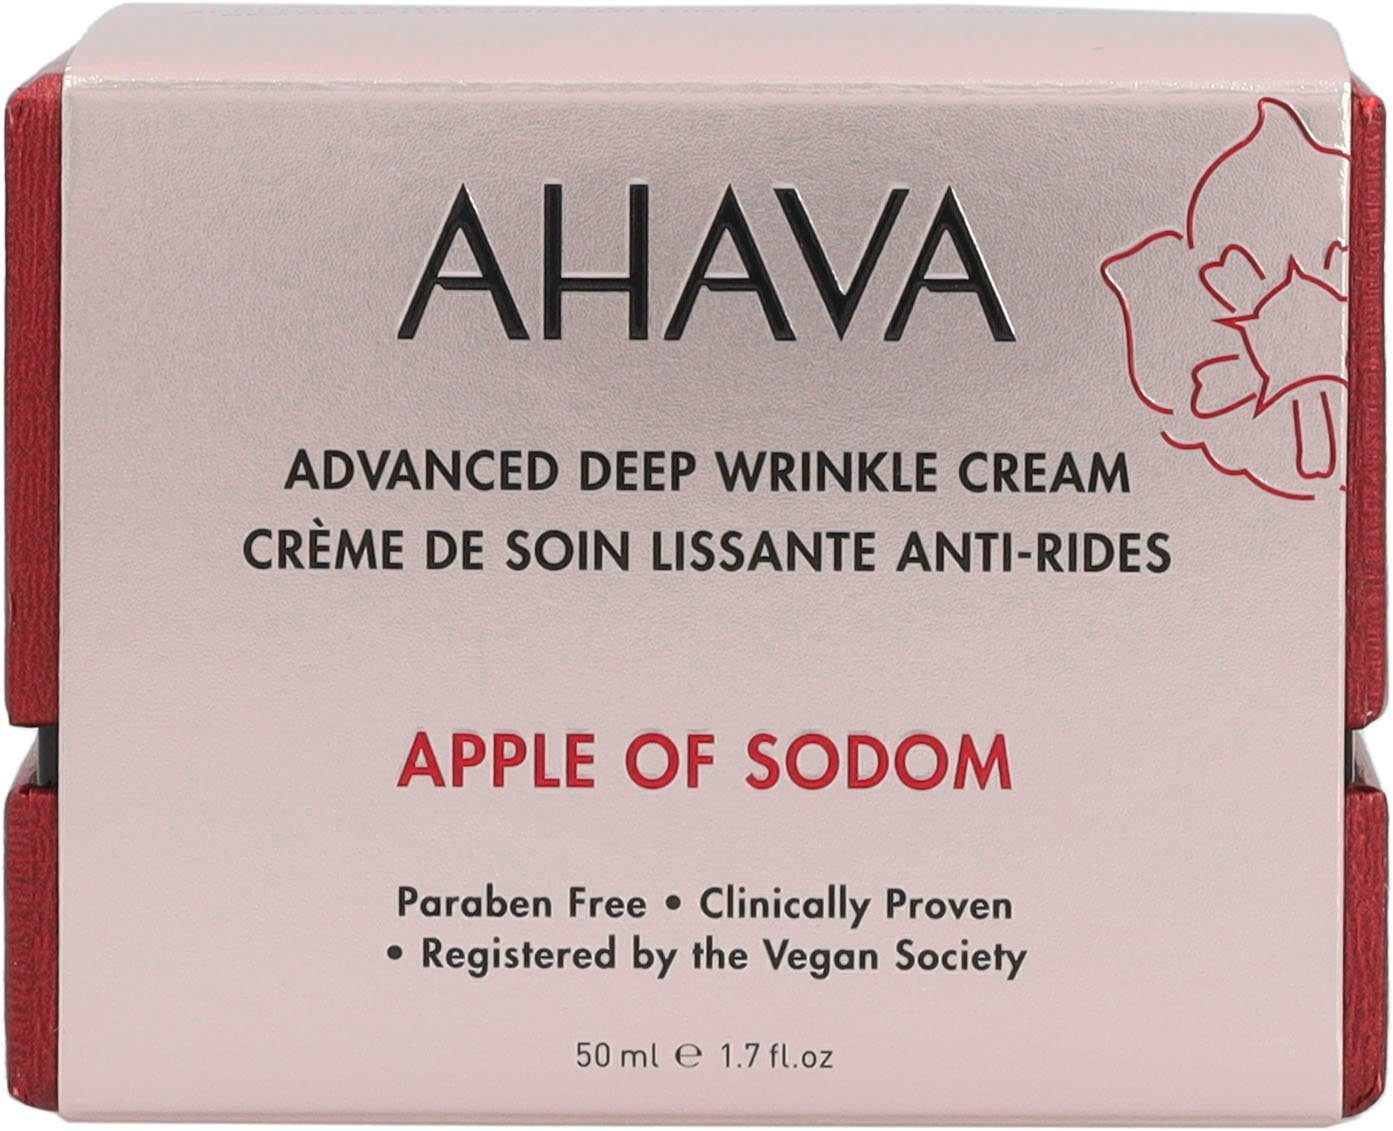 Global Of Apple AHAVA Sodom Deep Cream Wrinkle Gesichtspflege Advanced